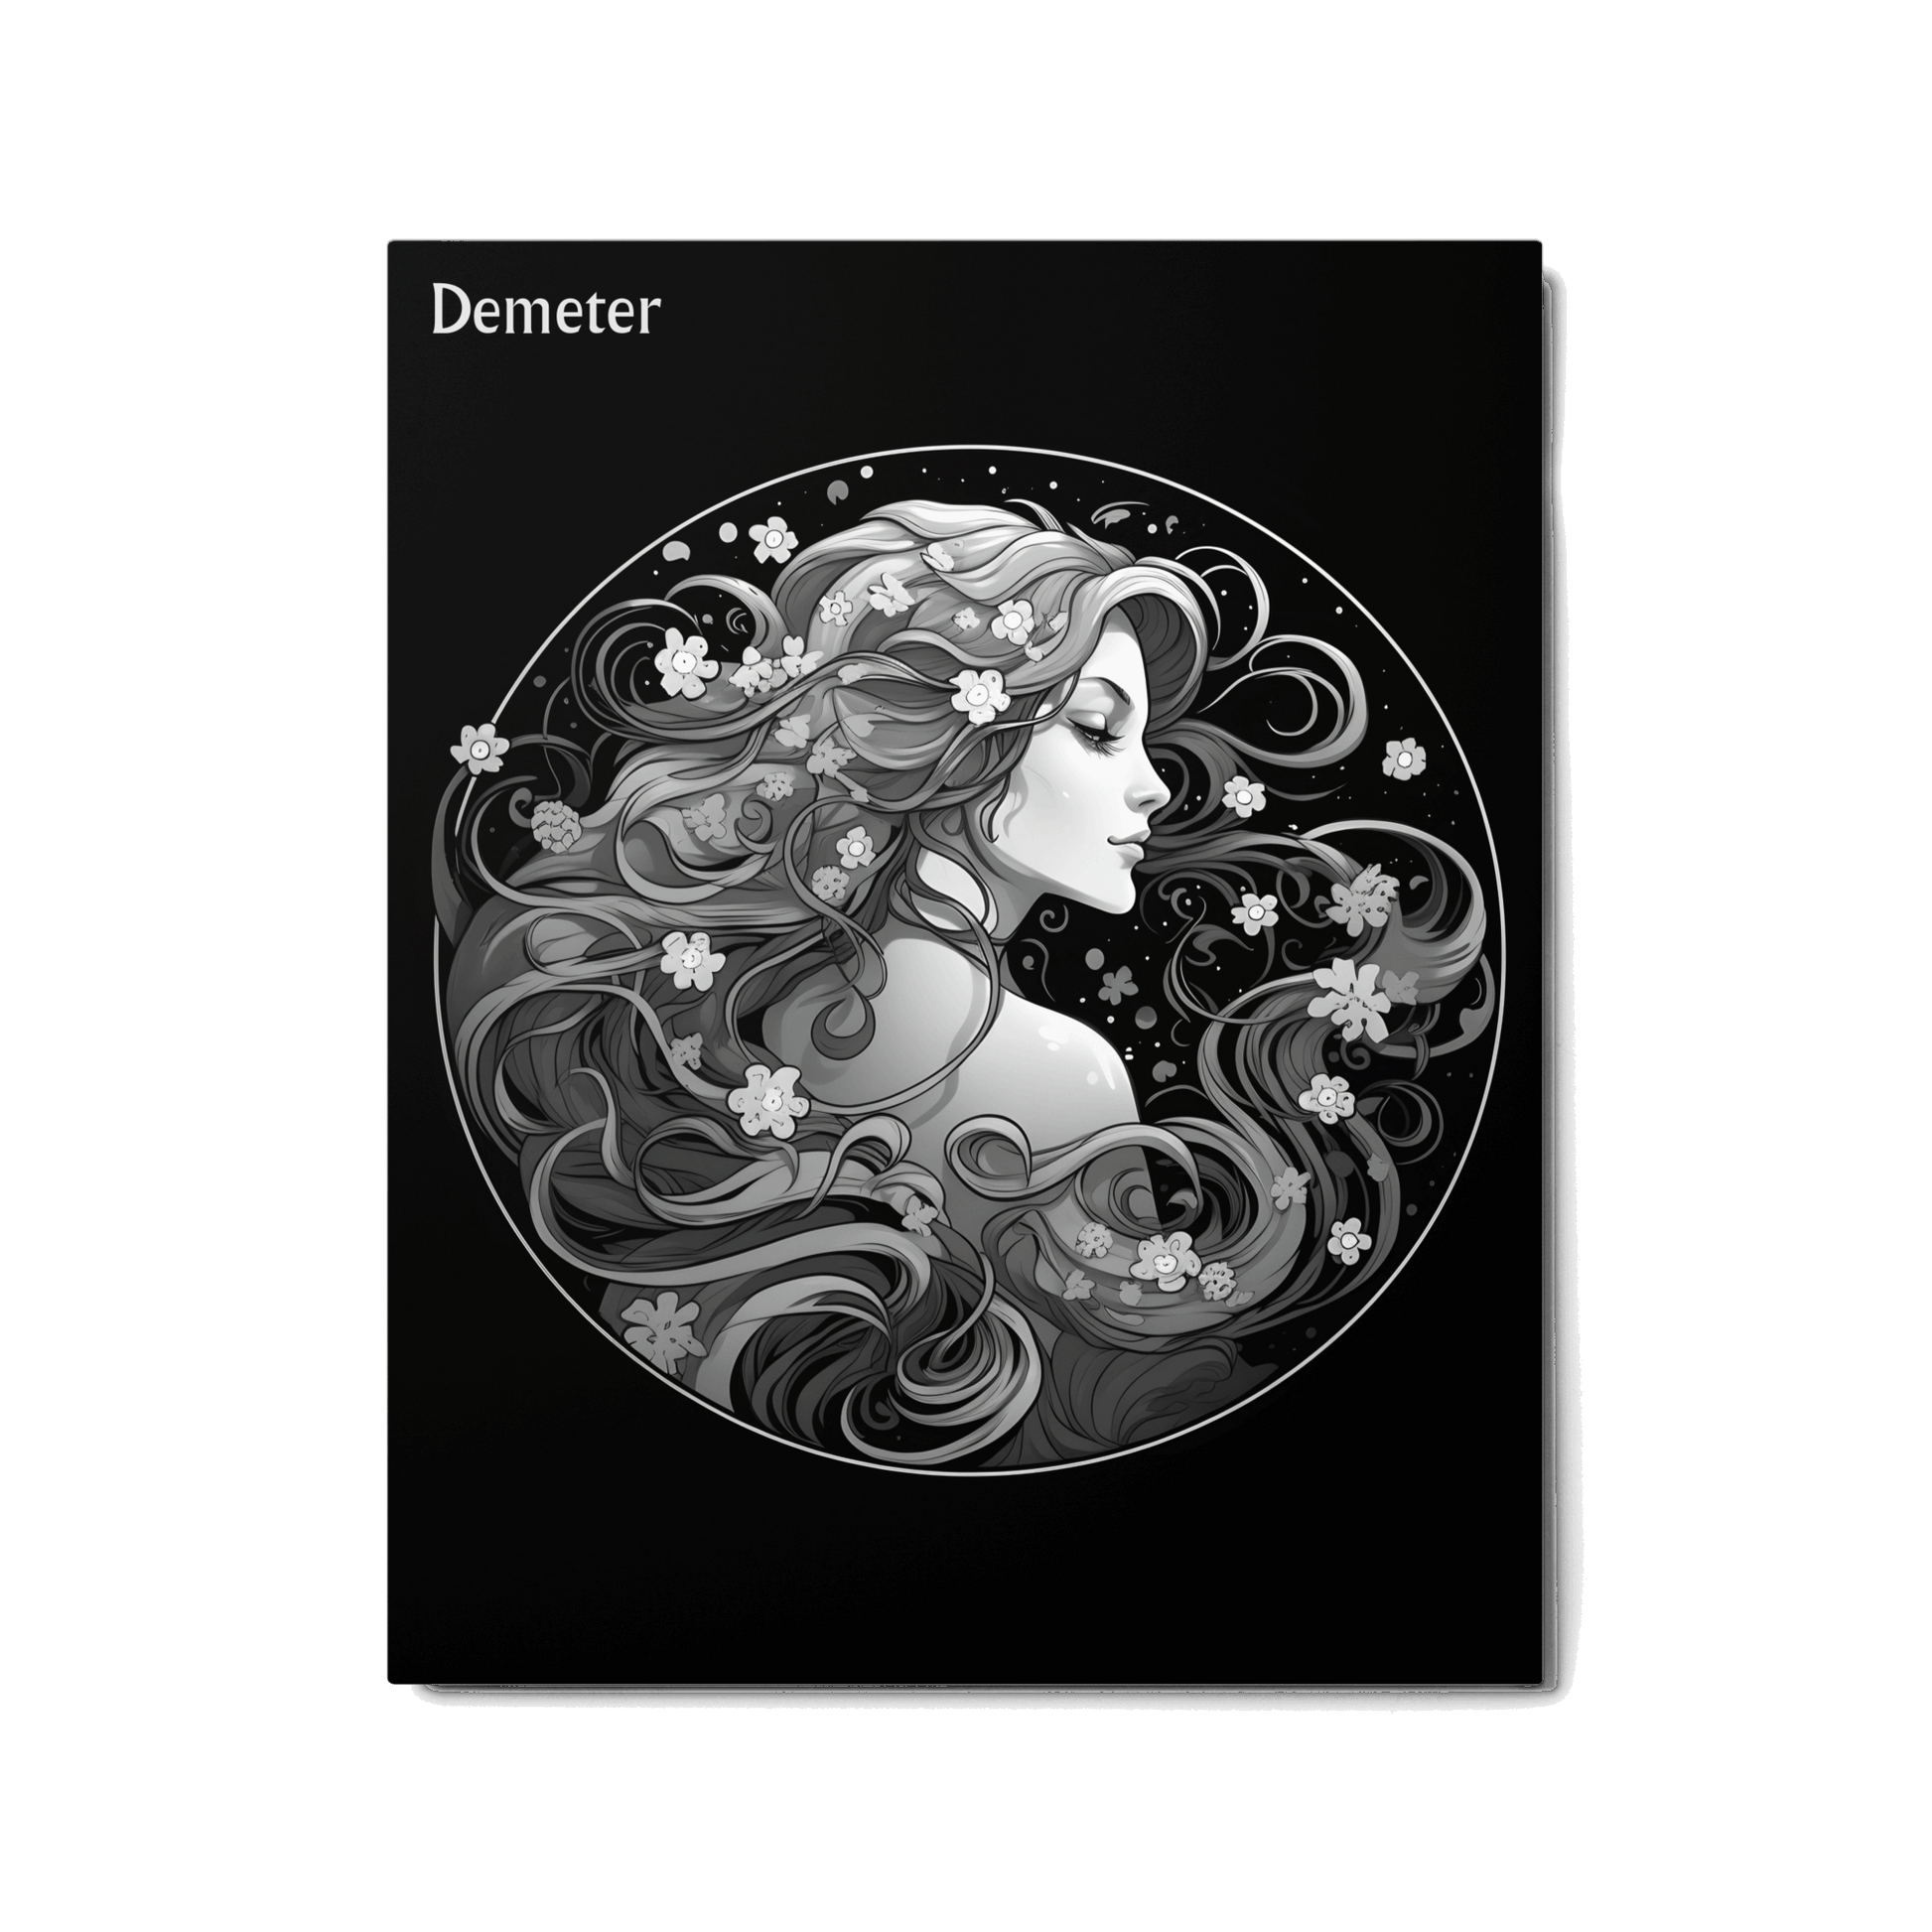 Demeter's Invigoration - Black and White Hanging Wall Art High Quality Metal Print DrawDadDraw